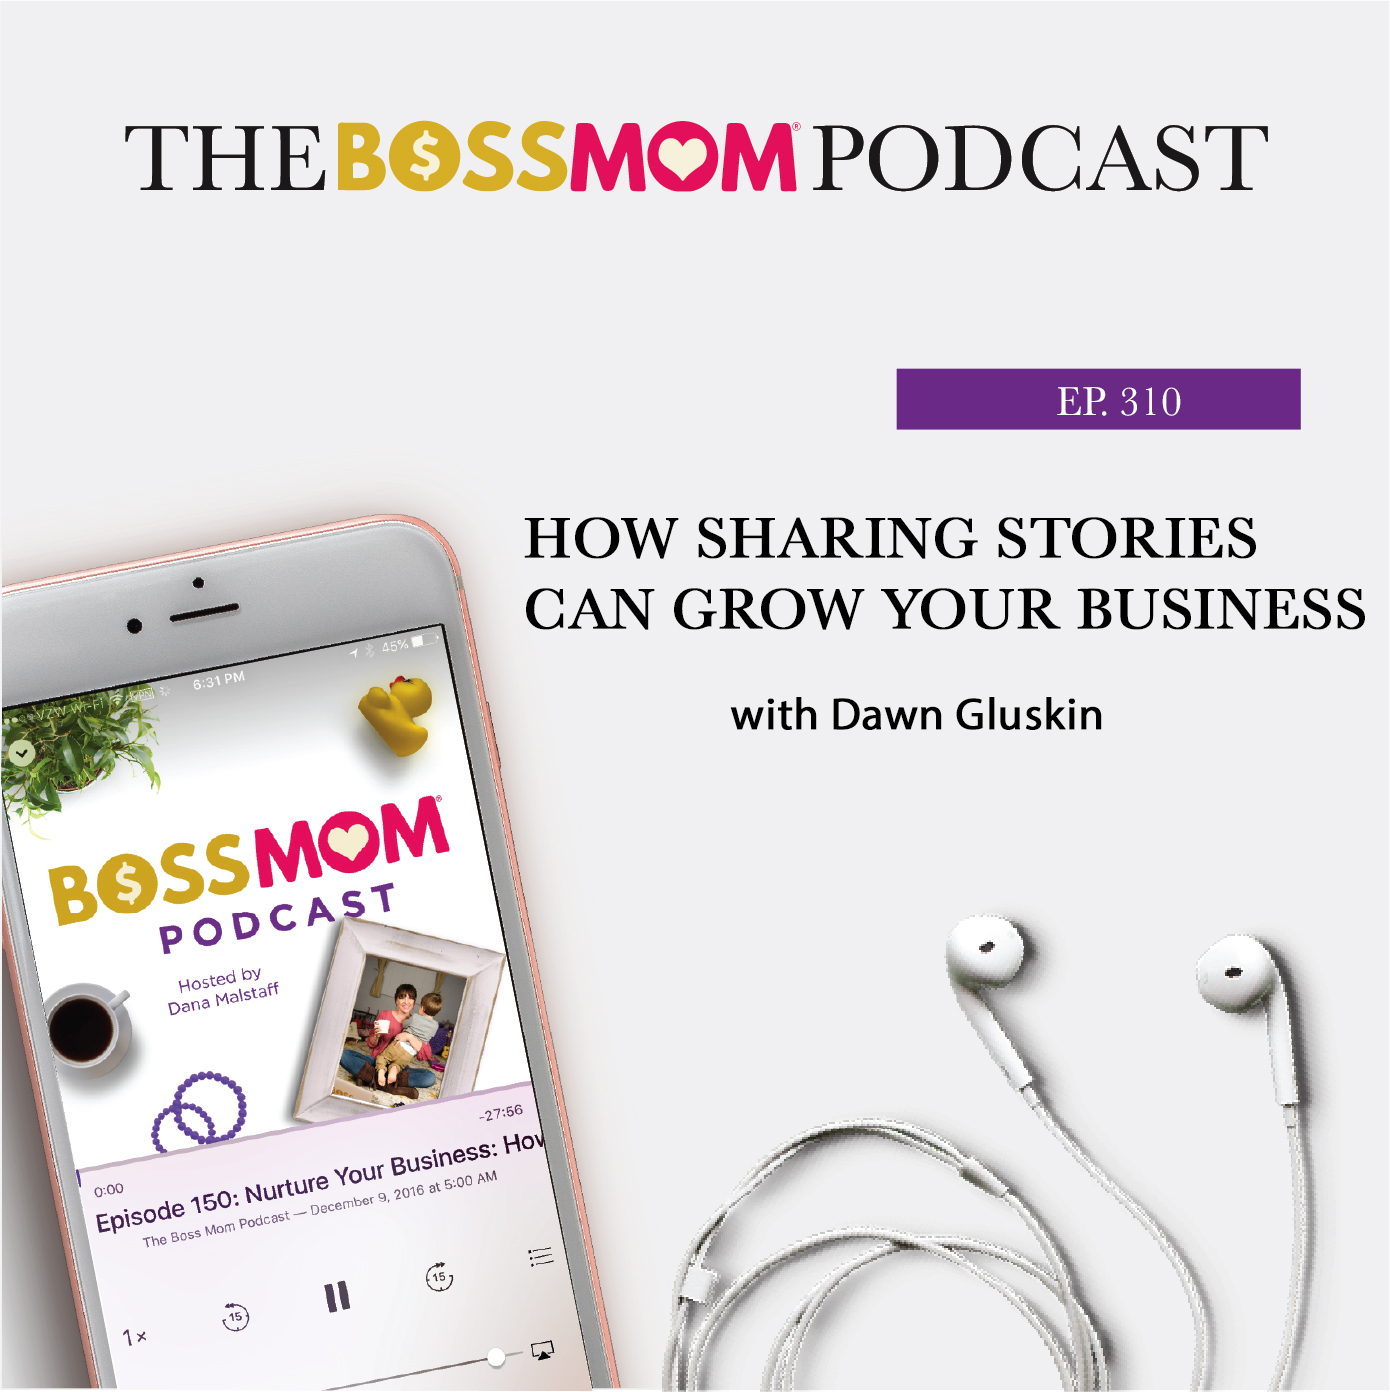 The Boss Mom Podcast